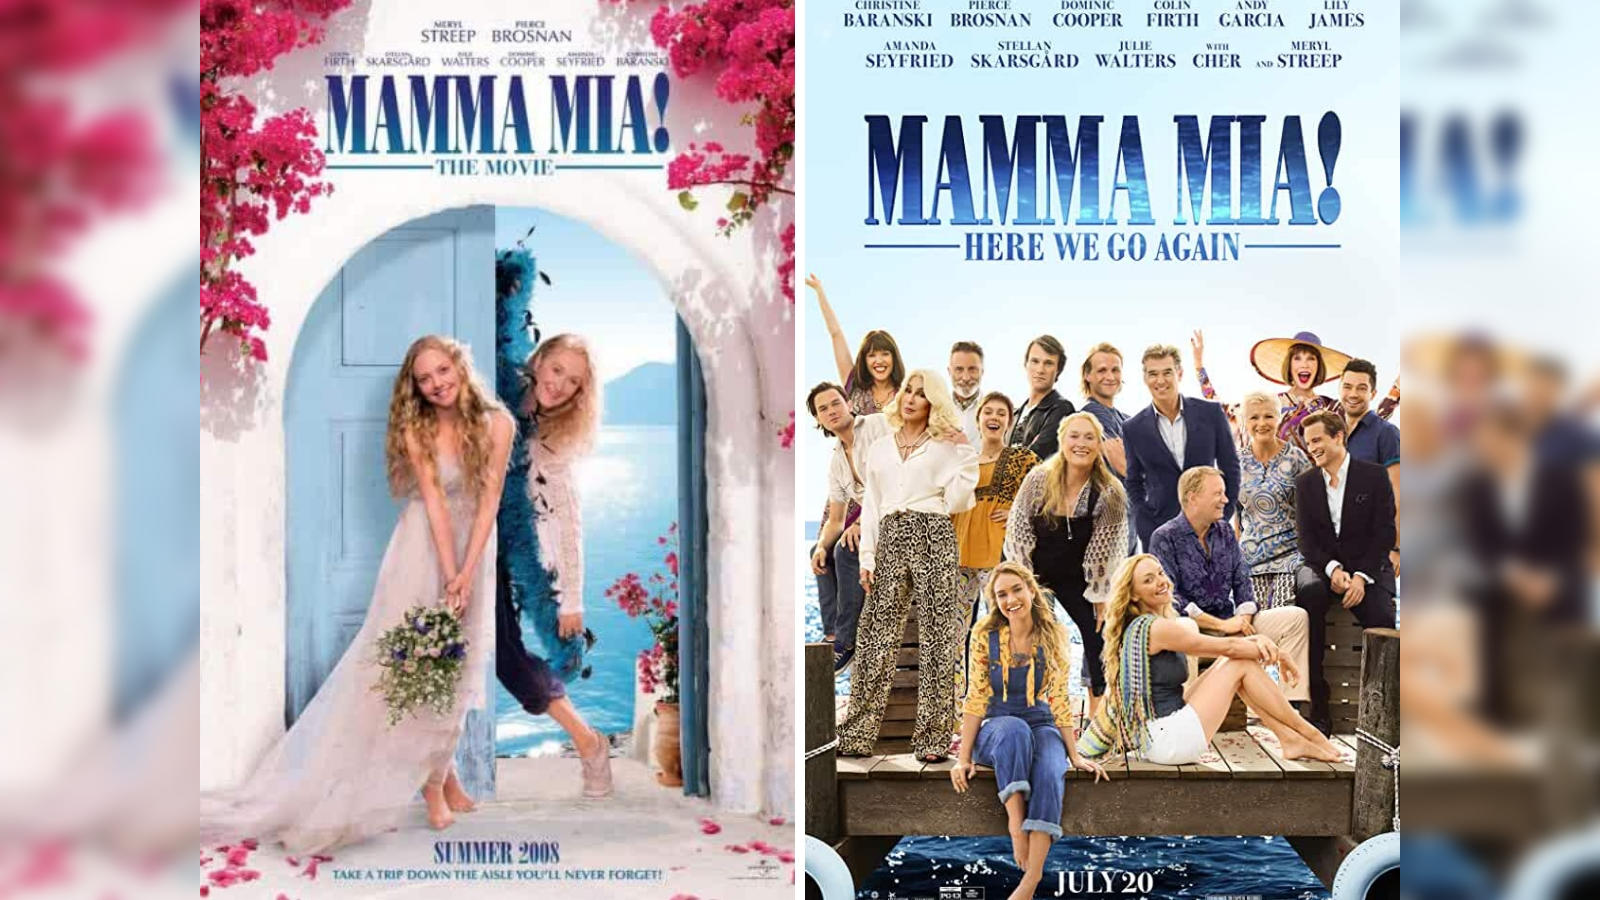 Mamma Mia 3 confirmed: Comedian Alan Carr drops exciting details